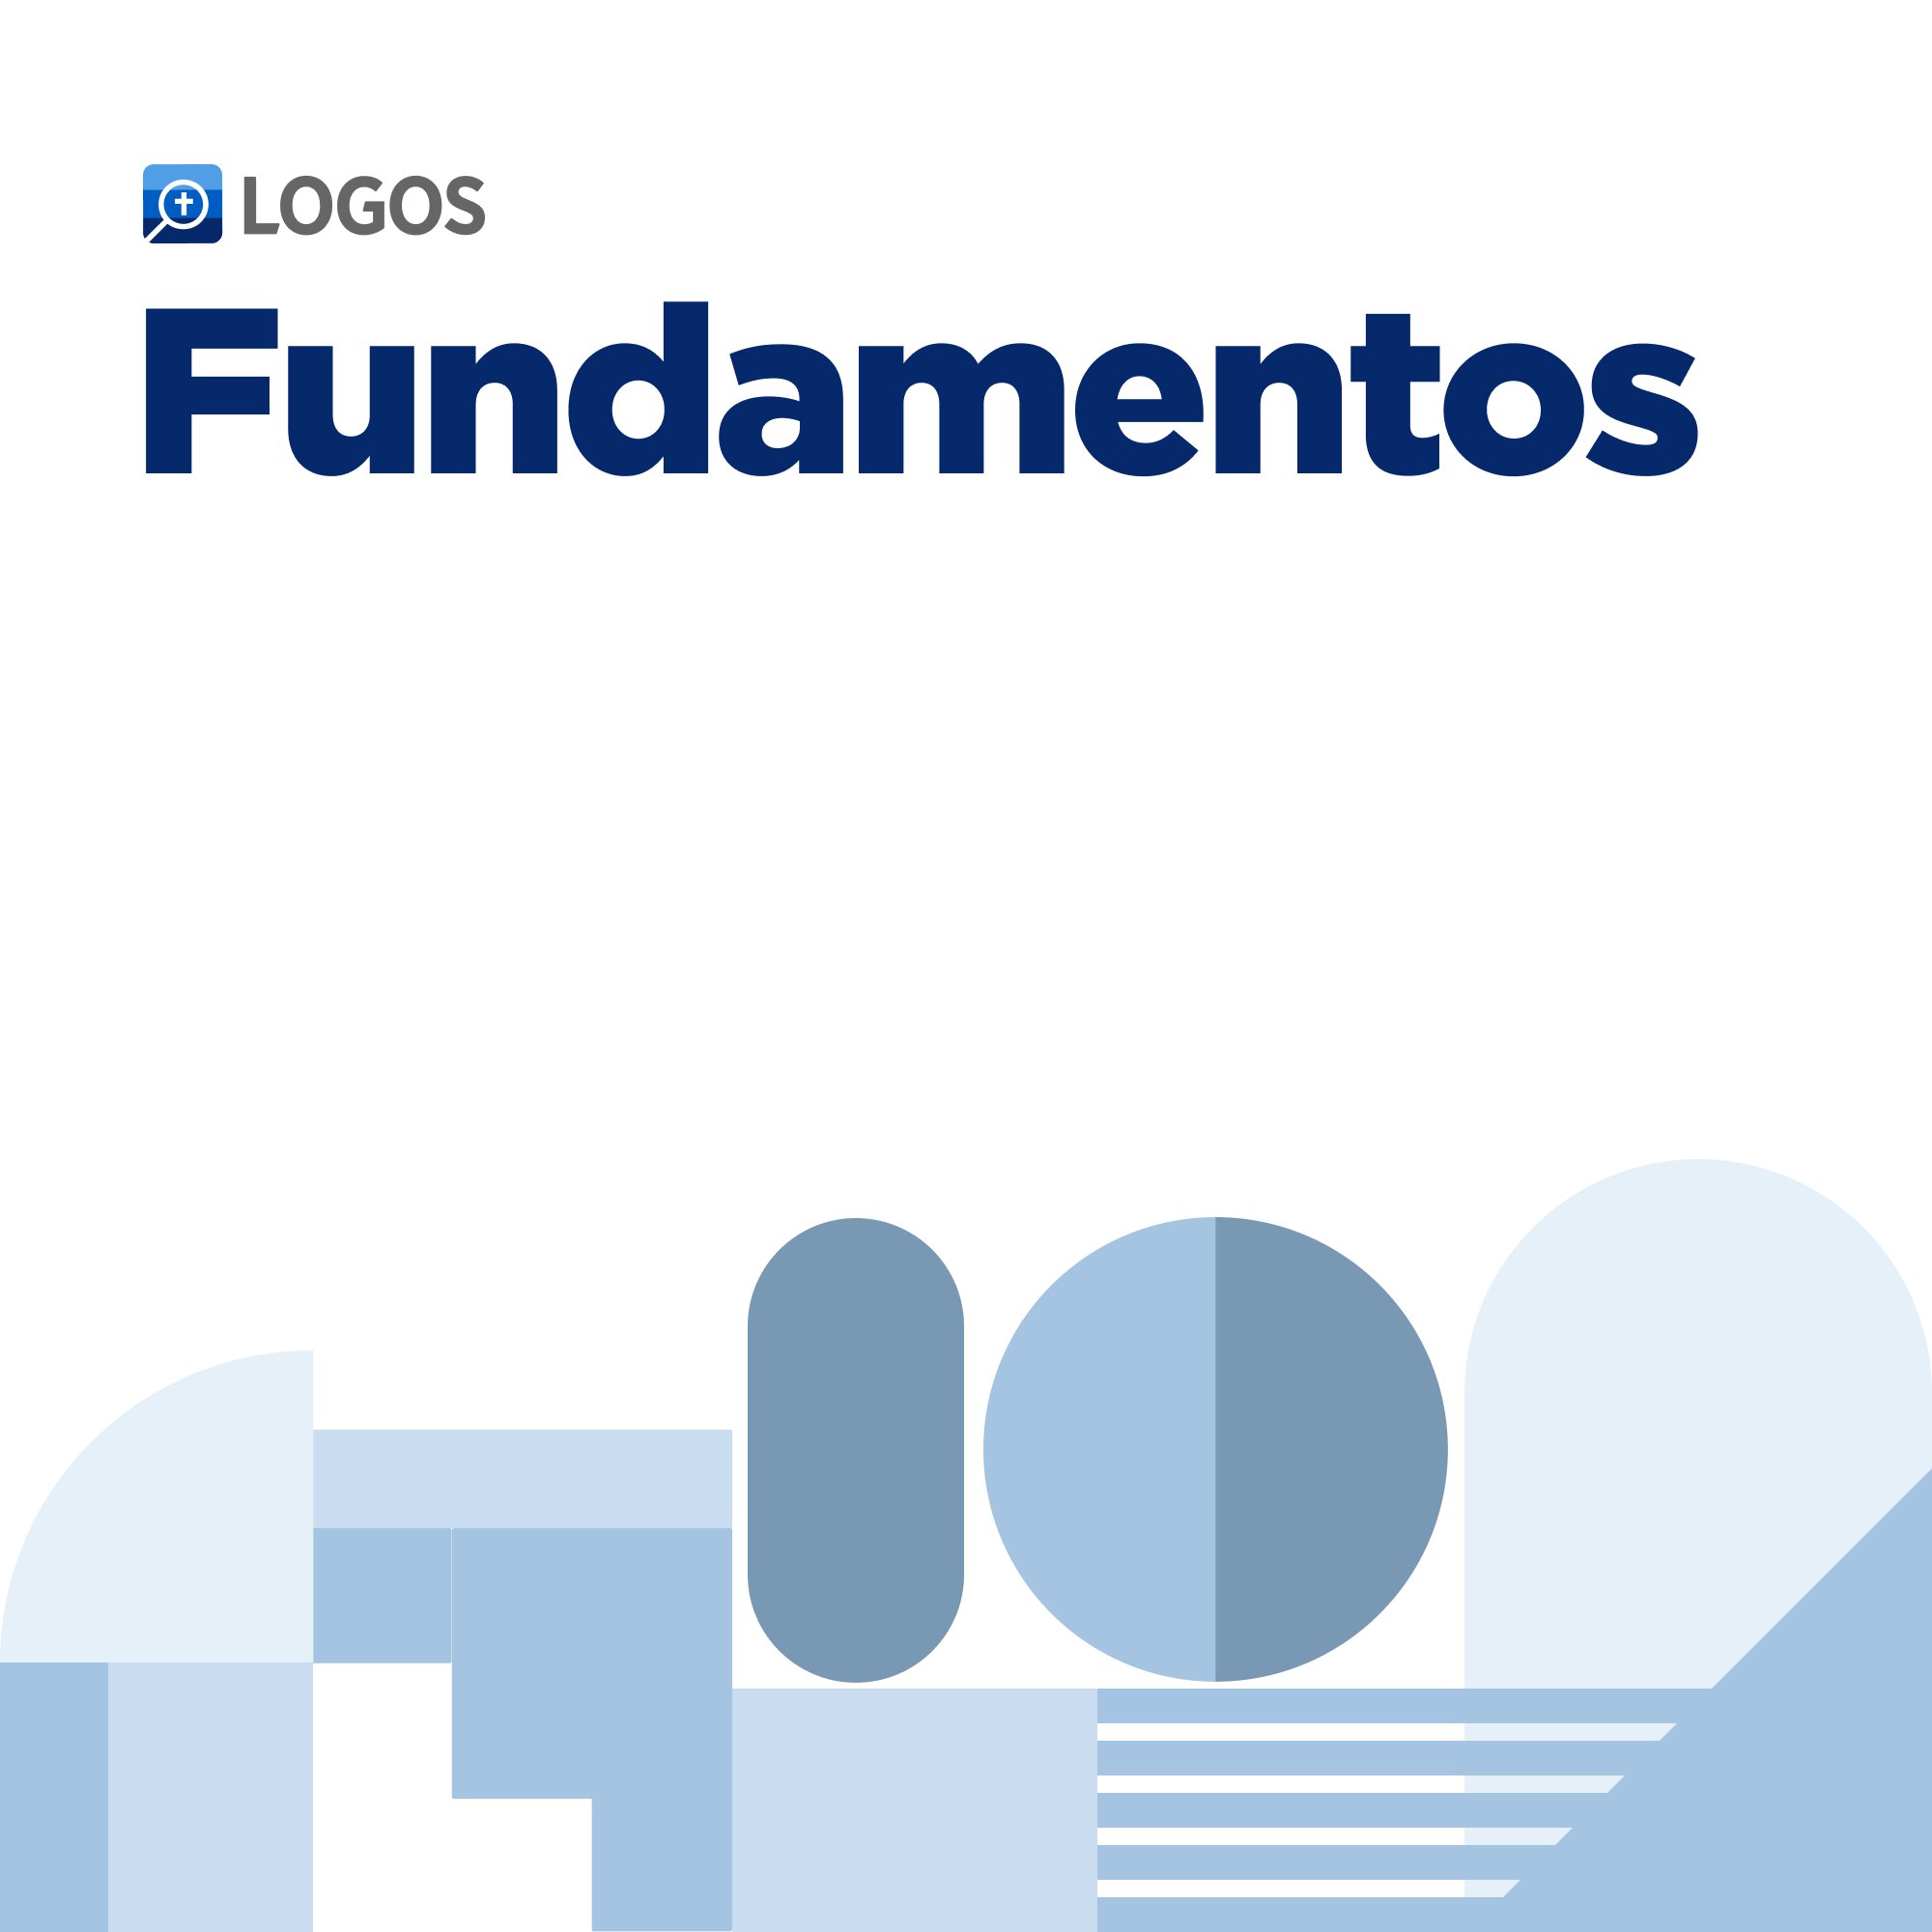 Logos 10 Fundamentals